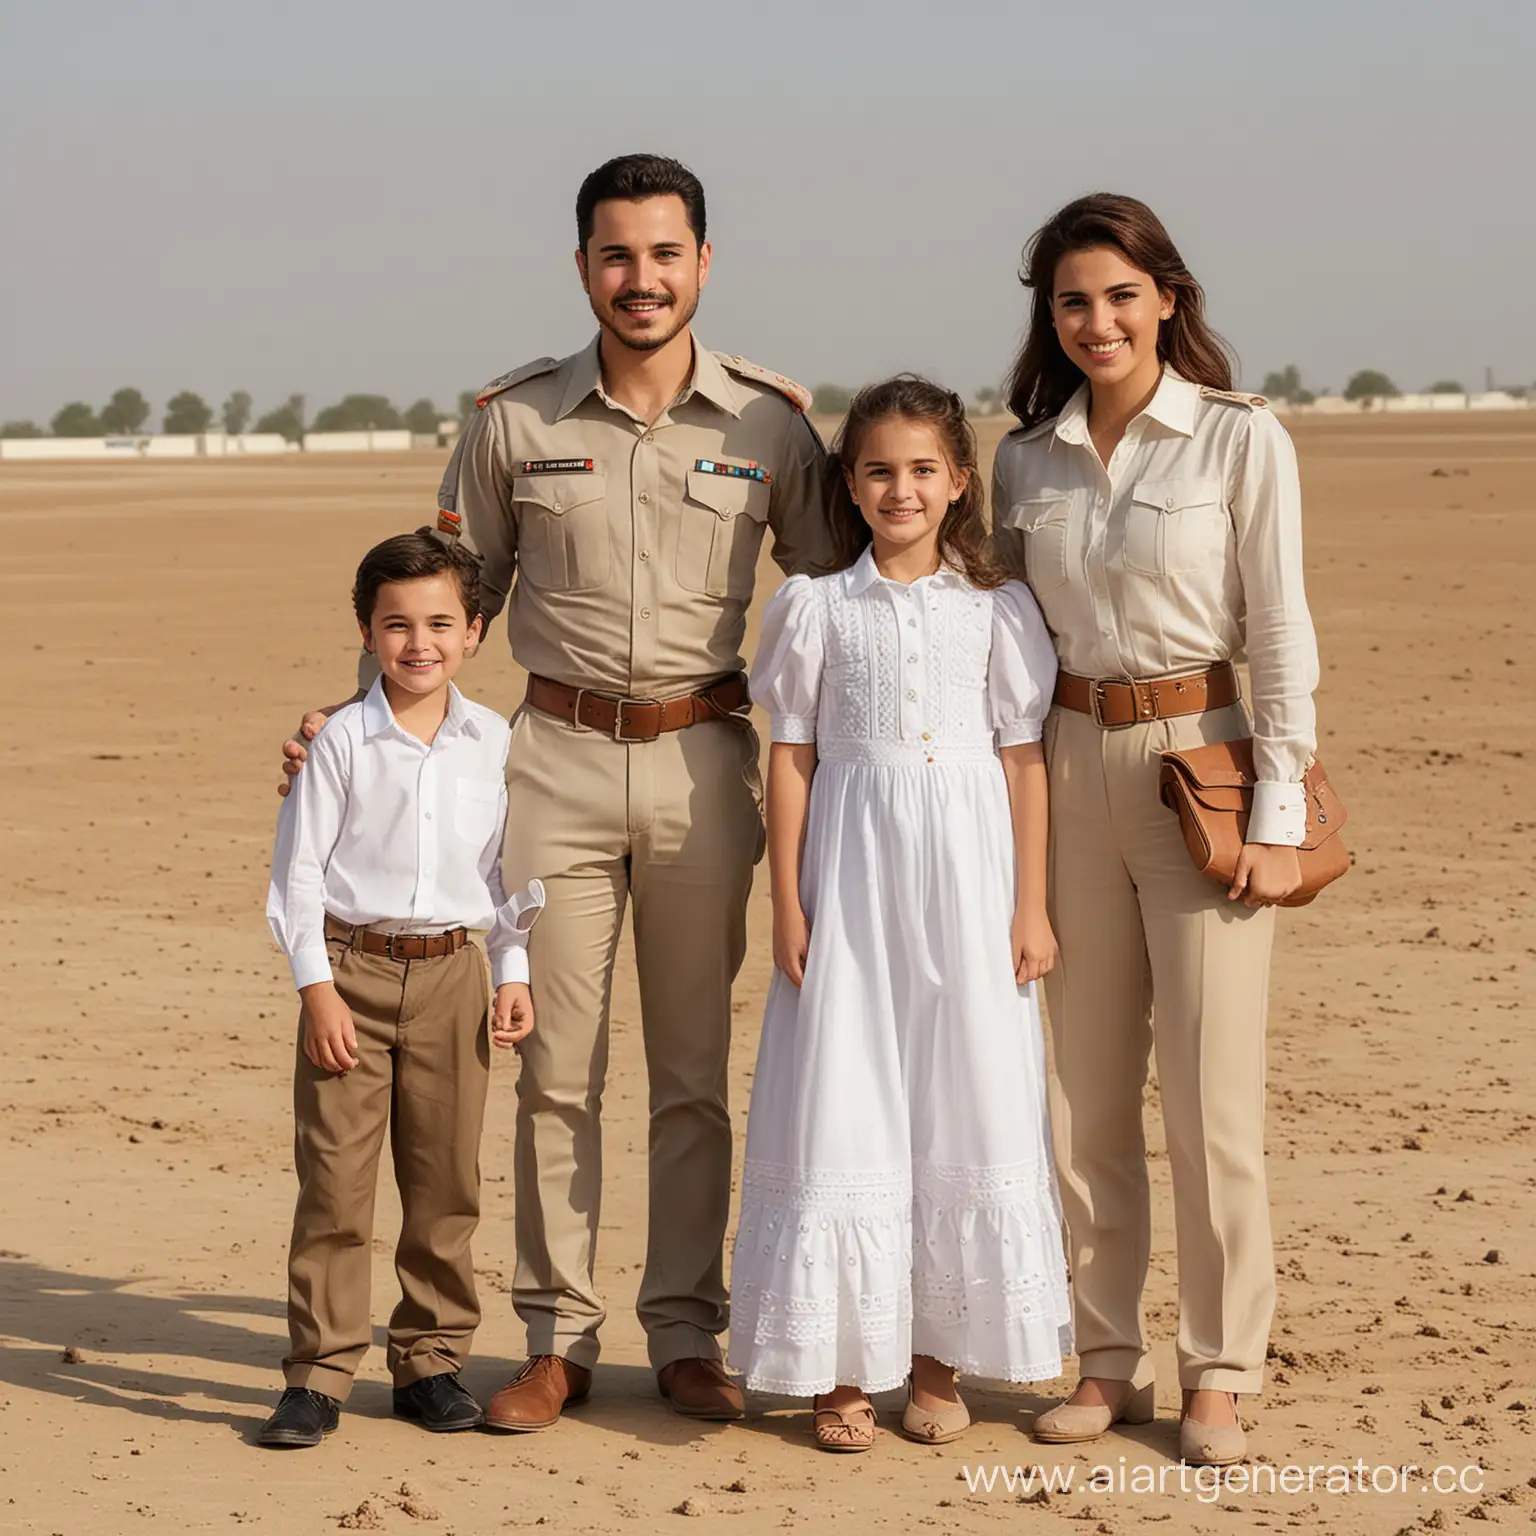 Prince-Hussein-and-Rajwa-Al-Saif-Enjoying-Quality-Time-with-Their-Children